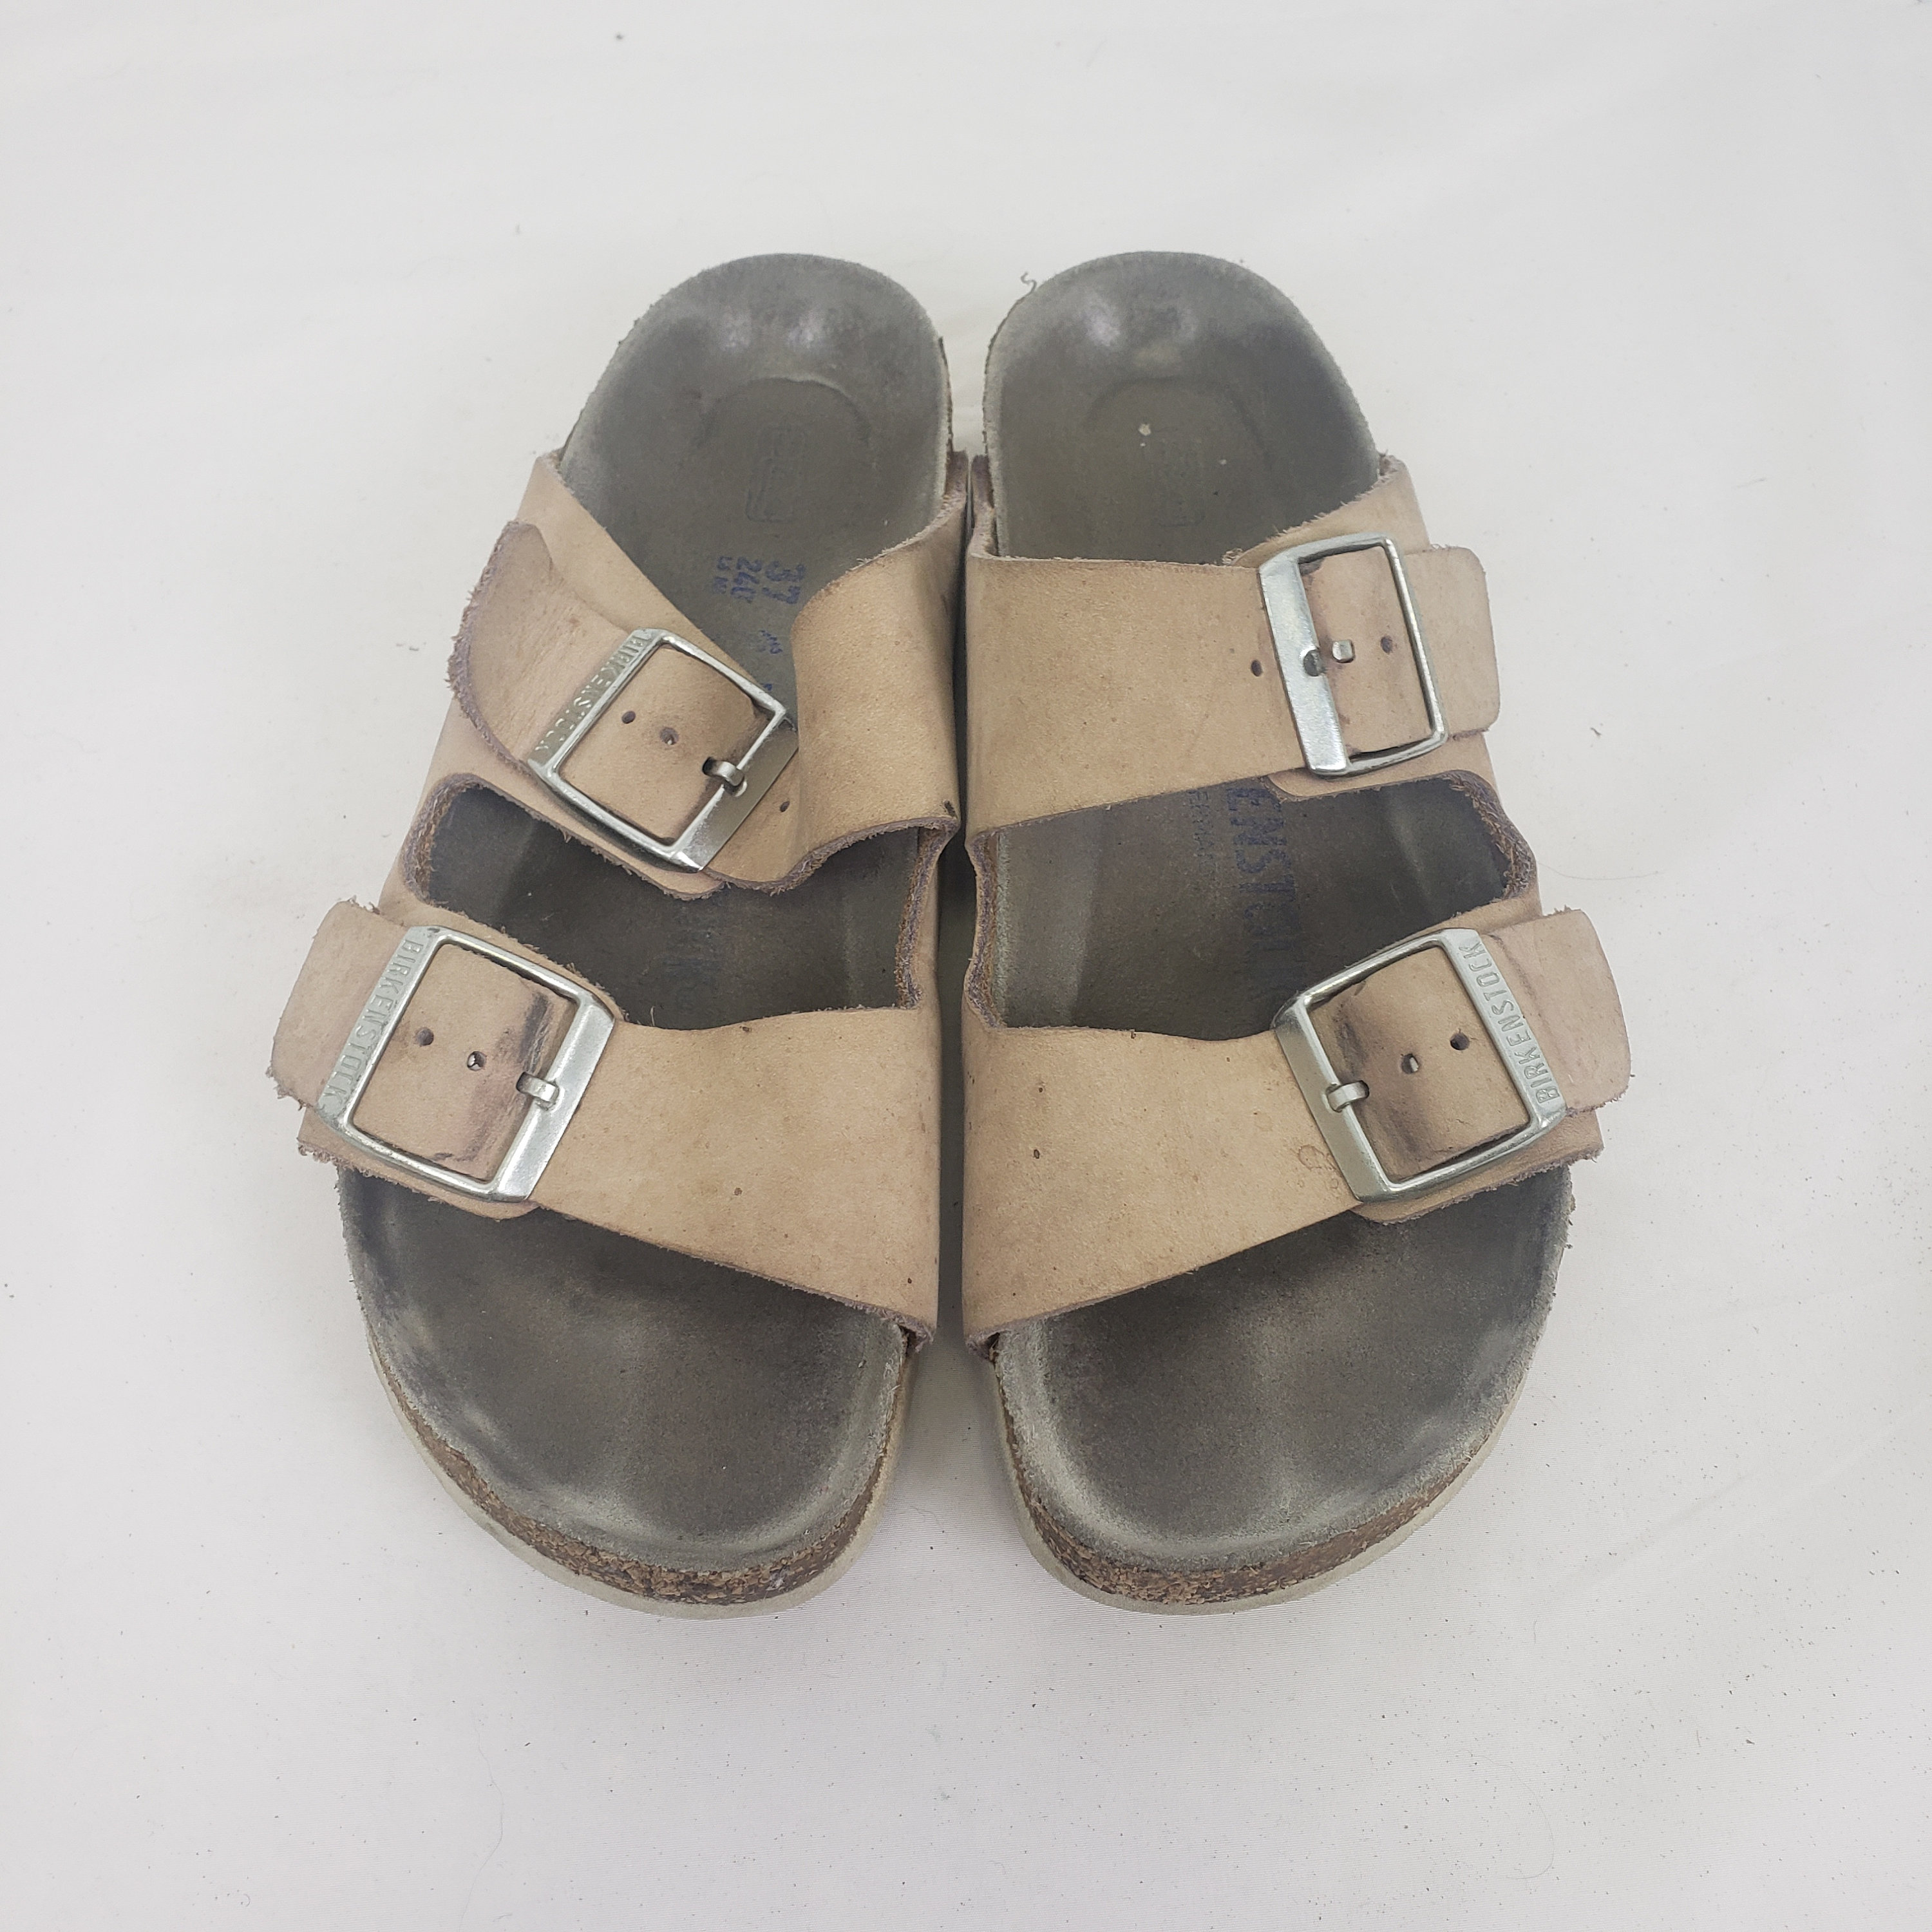 Birkenstocks Sale - Save on These Cute & Trendy Sandals!